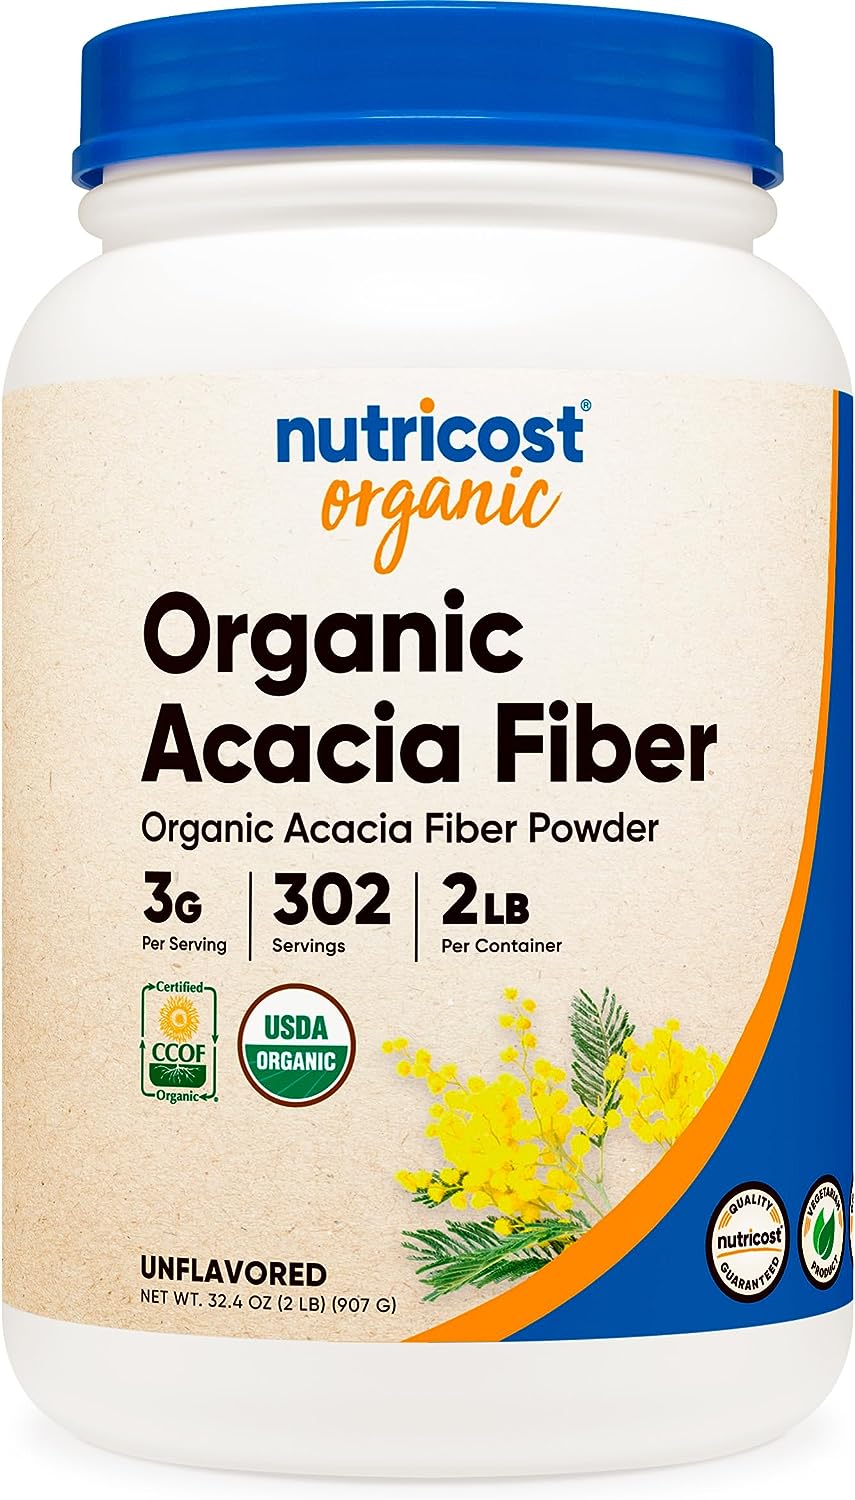 Nutricost Organic Acacia Fiber Powder (2 ) - USDA Certified Organic, Non-GMO, Gluten Free